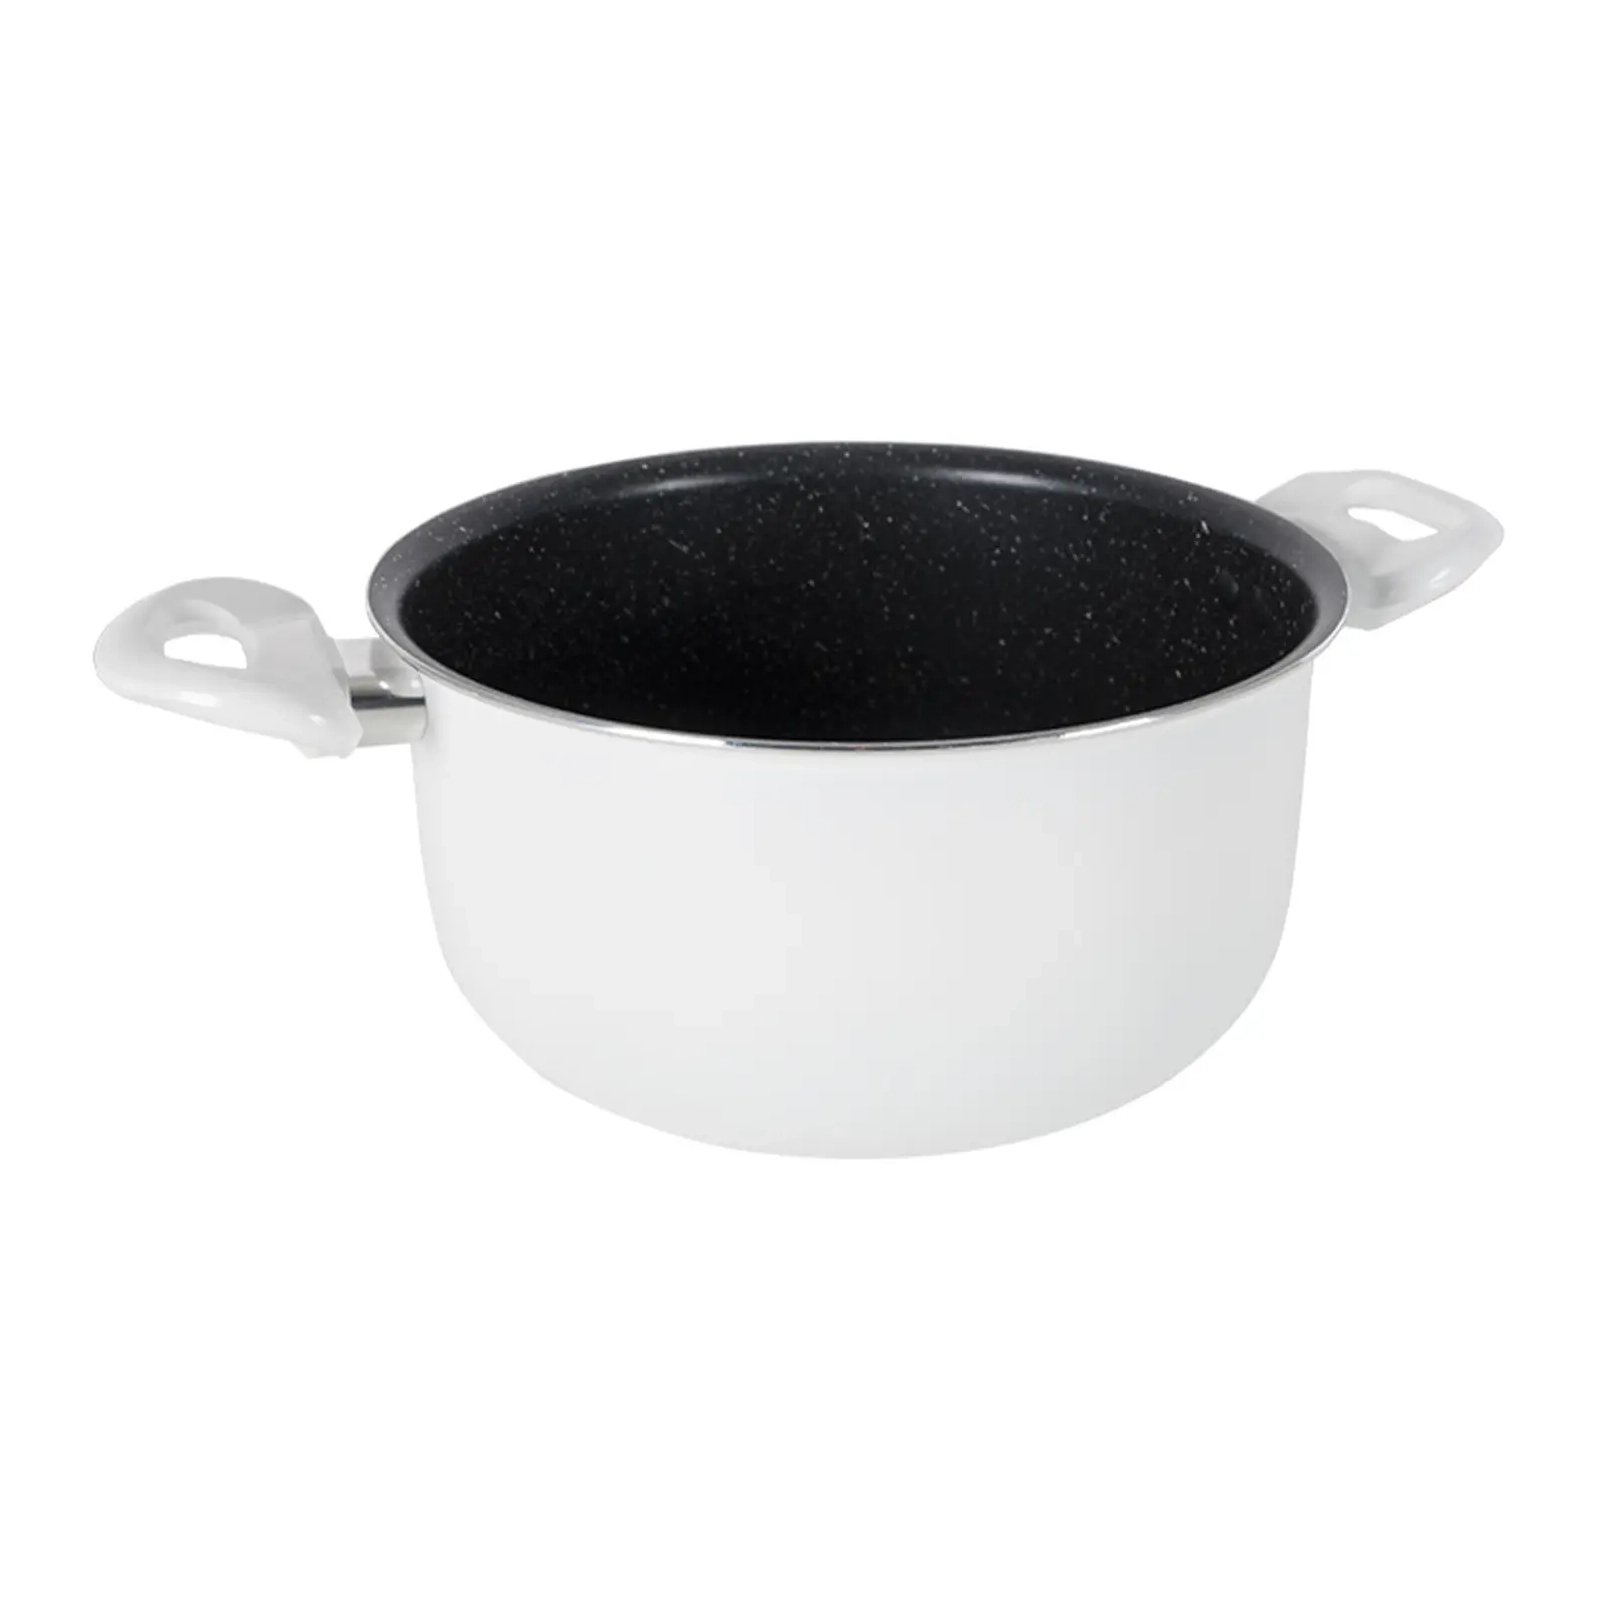 Набор посуды Gimex Cookware Set induction 7 предметів White (6977221) изображение 3